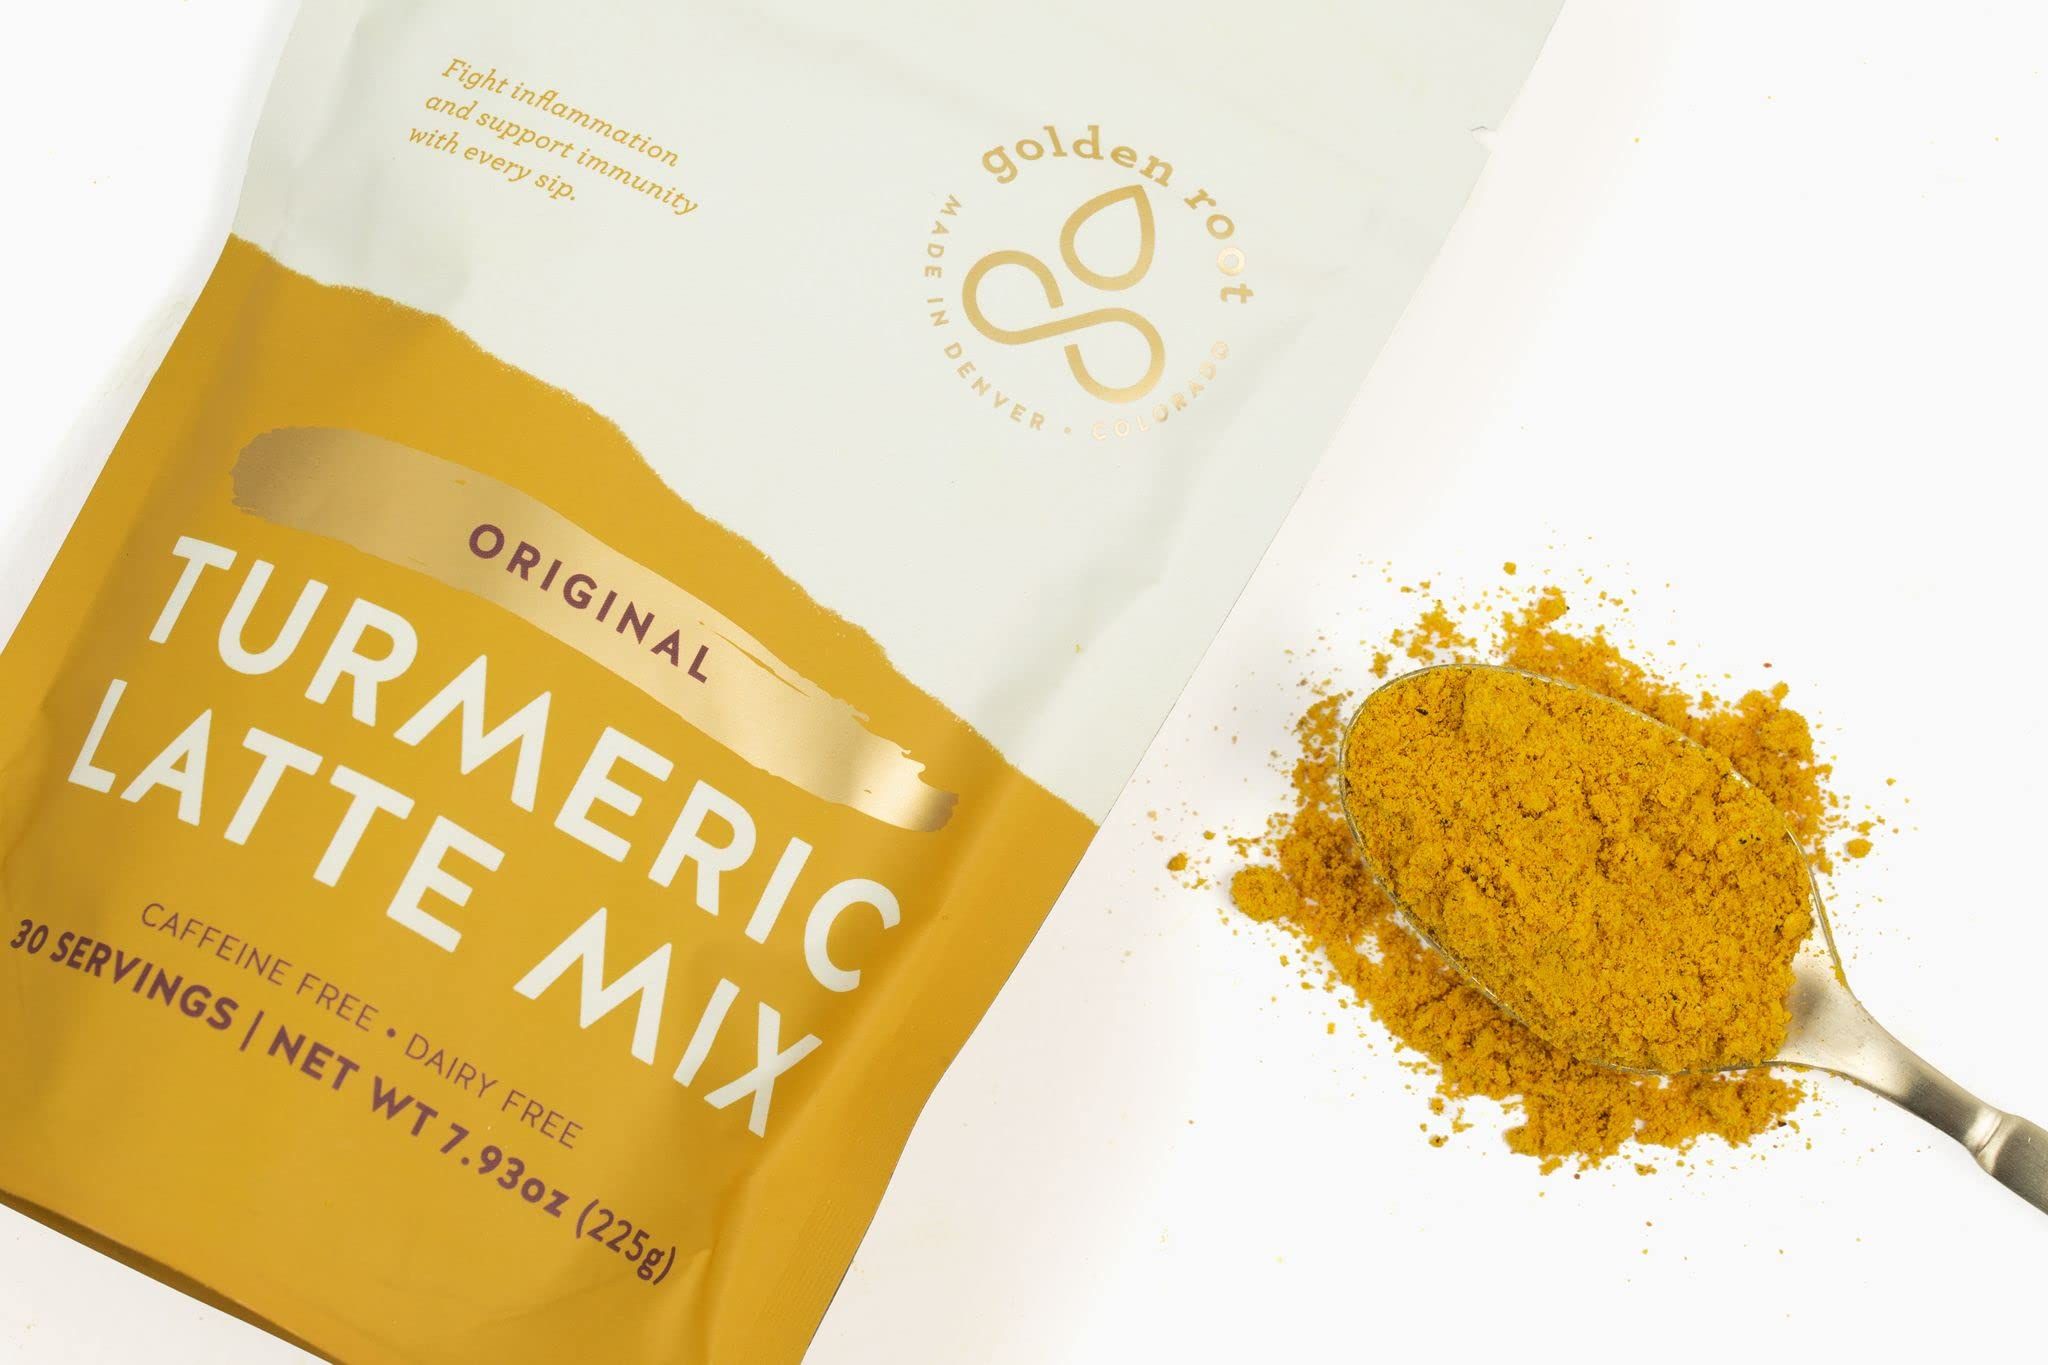 Golden Root Original - Organic Turmeric Latte Superfood - Turmeric Golden Milk Powdered Mix - 30 ser | Amazon (US)